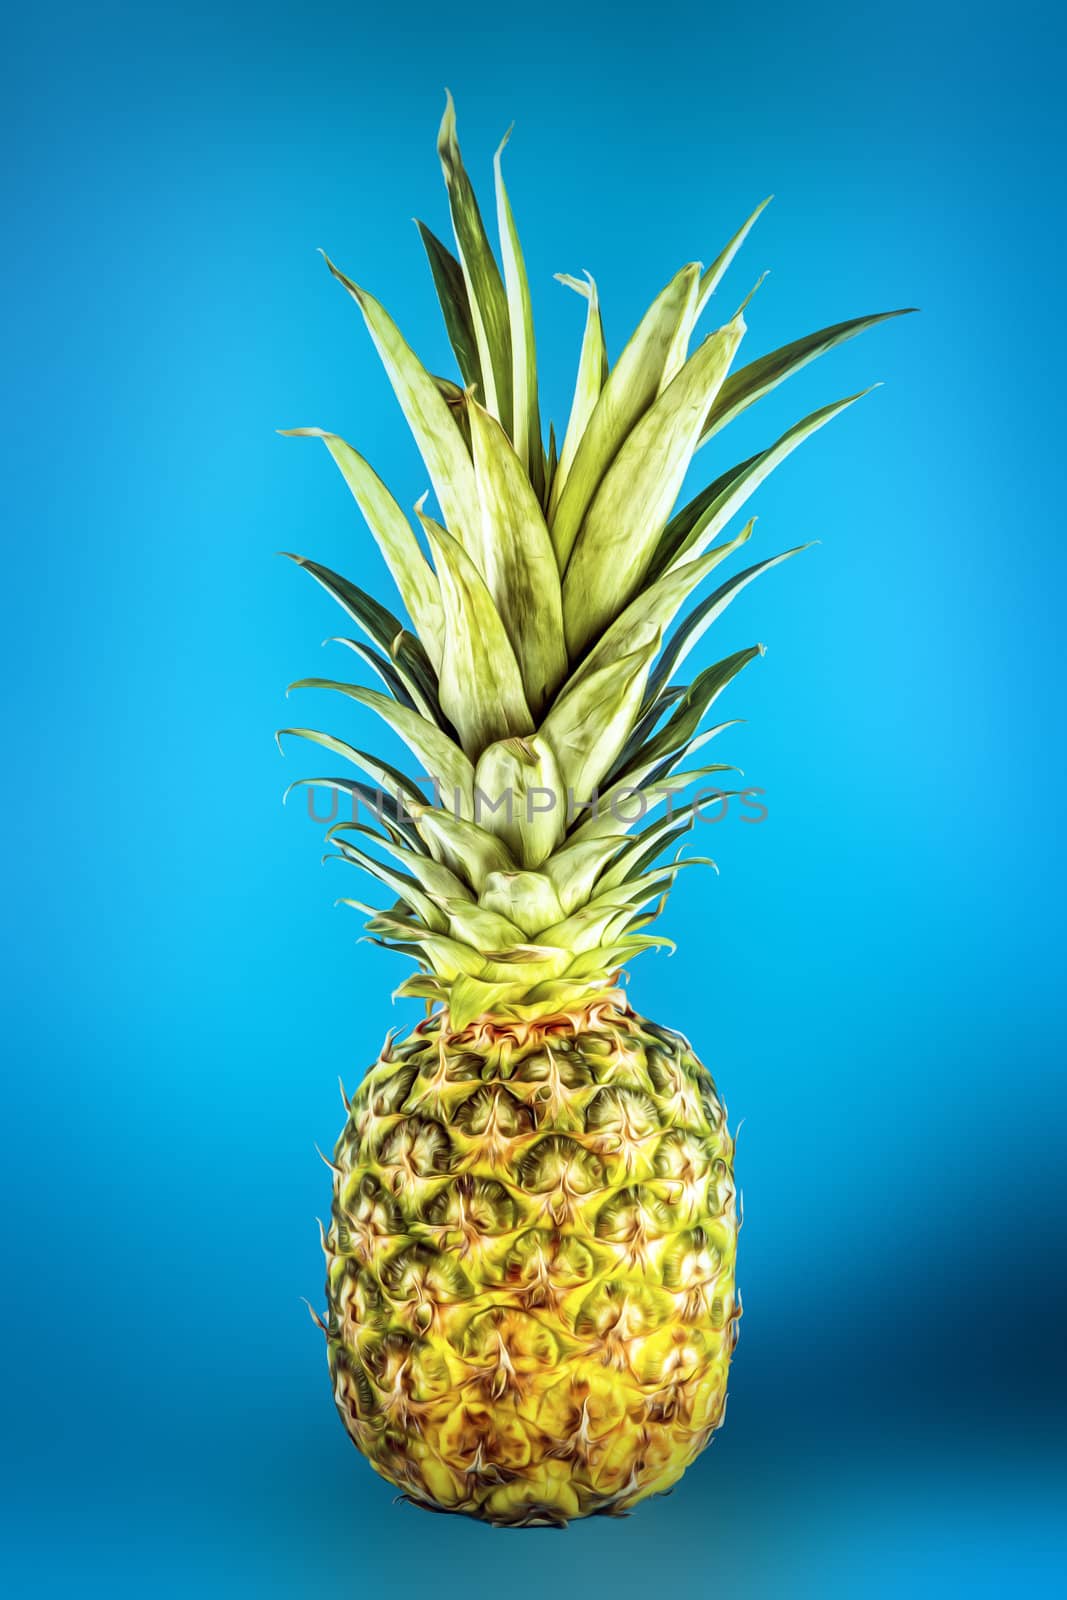 Studio pictoure of a pineapple on blue underground